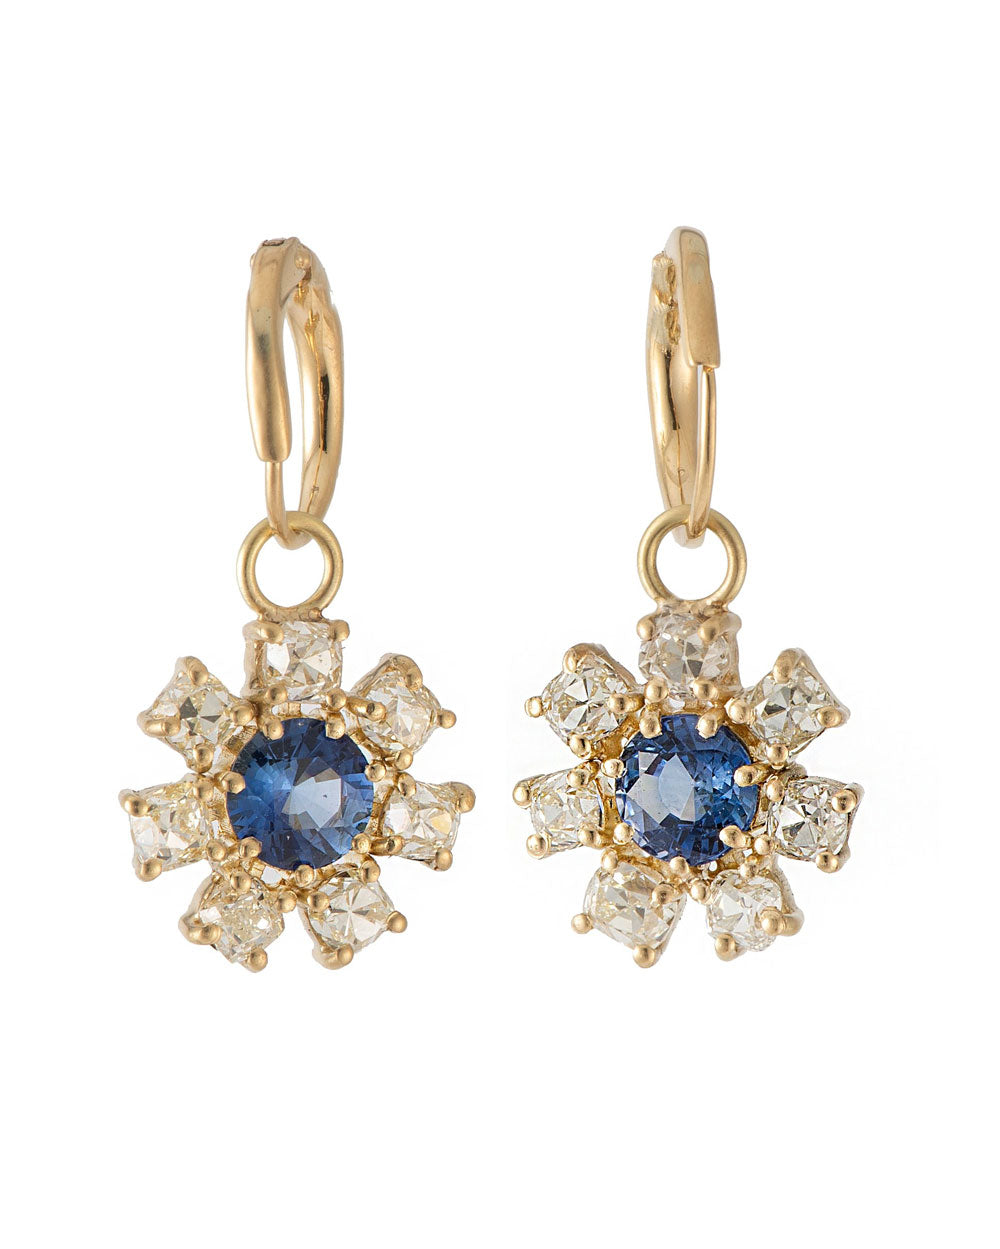 Round Diamond and Sapphire Earrings